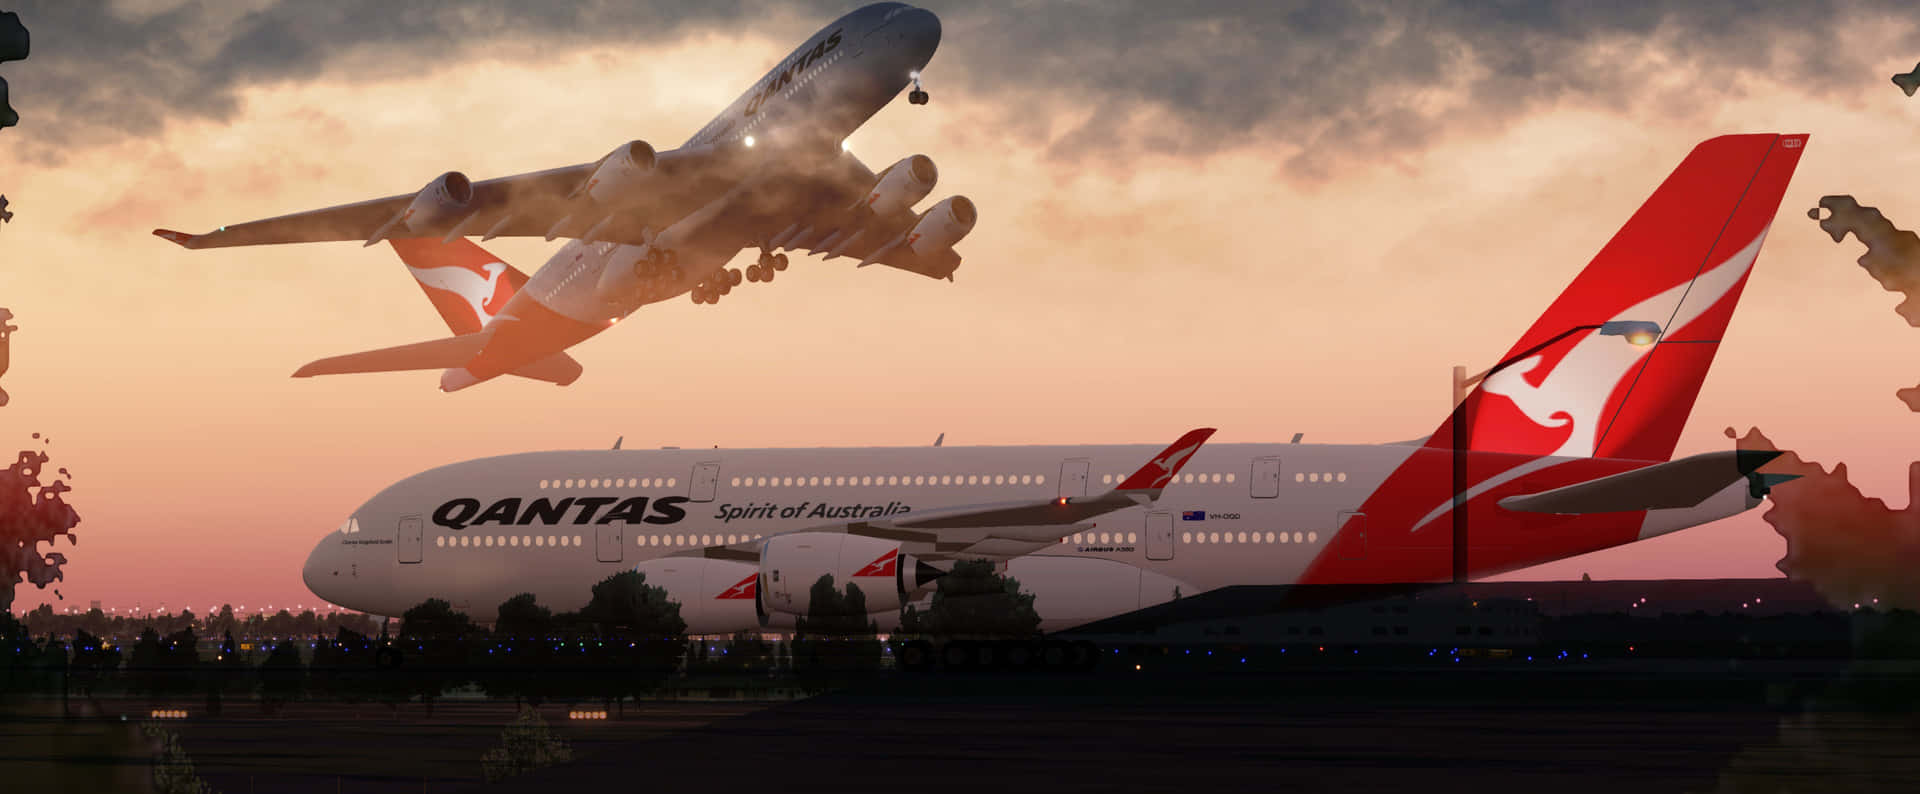 Qantasairways Boeing 747 Planet Över 4k Ultra Hd Wallpaper